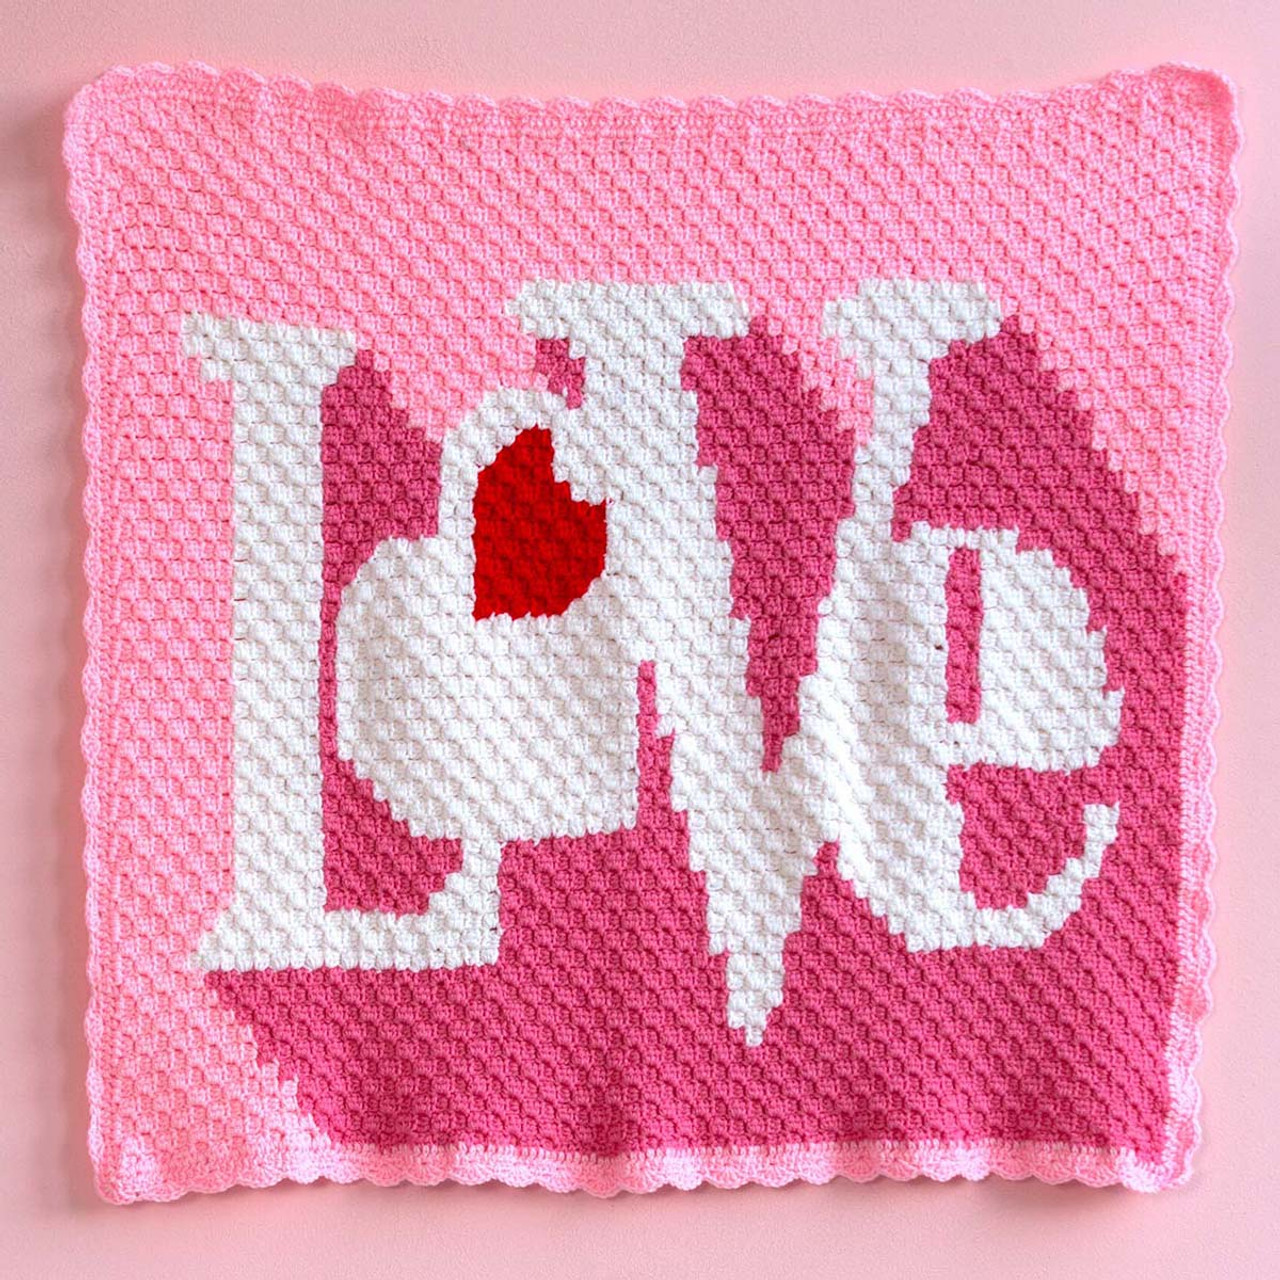 Red Heart Make A Crochet Blanket Statement